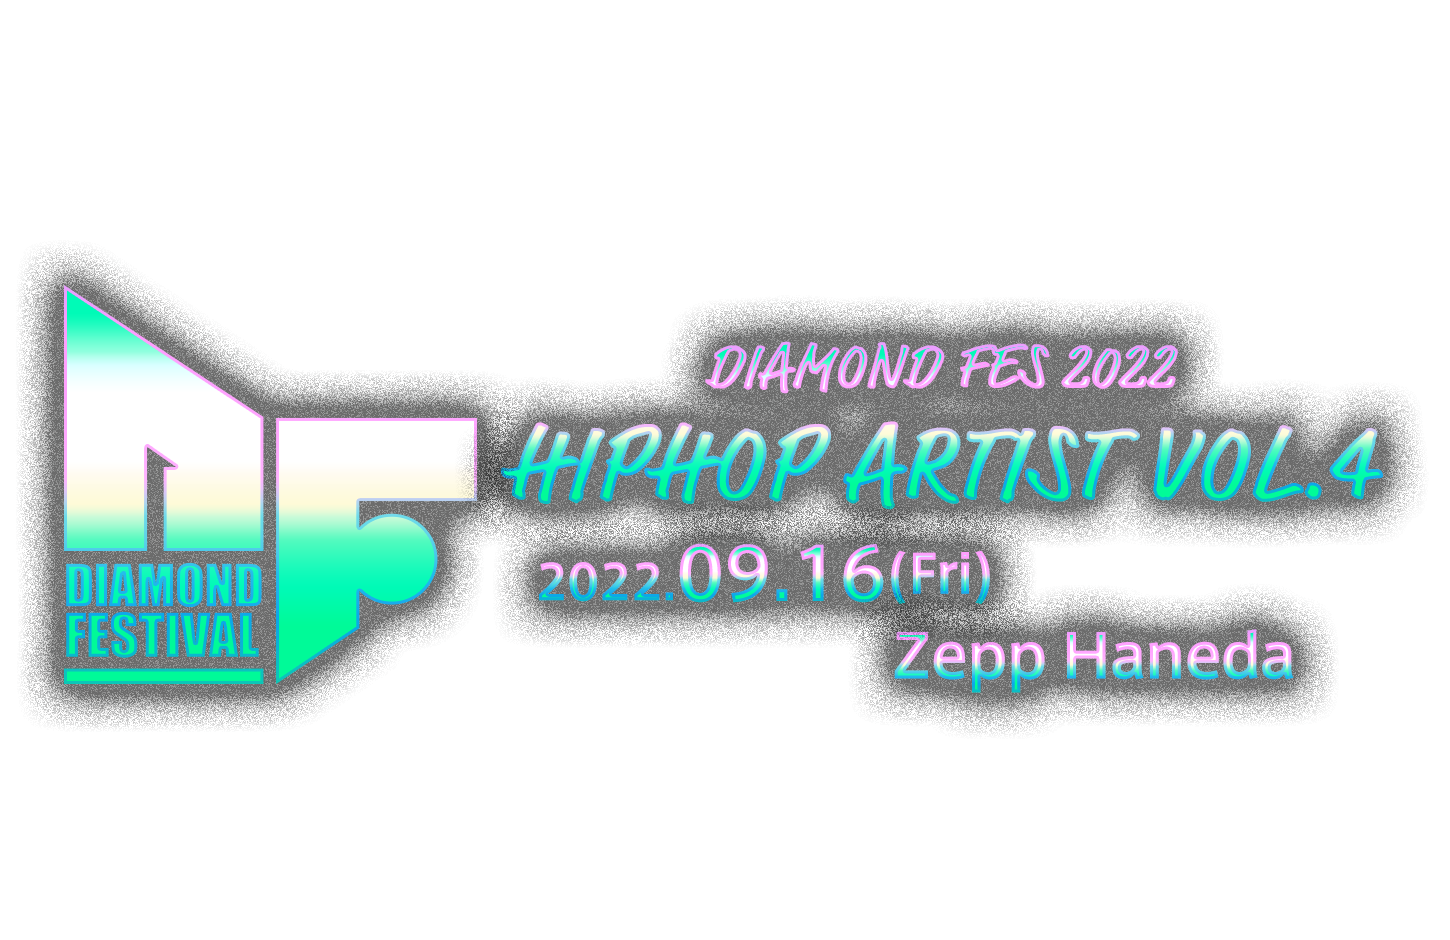 DIAMOND FES HIP HOP ARTIST VOL.4